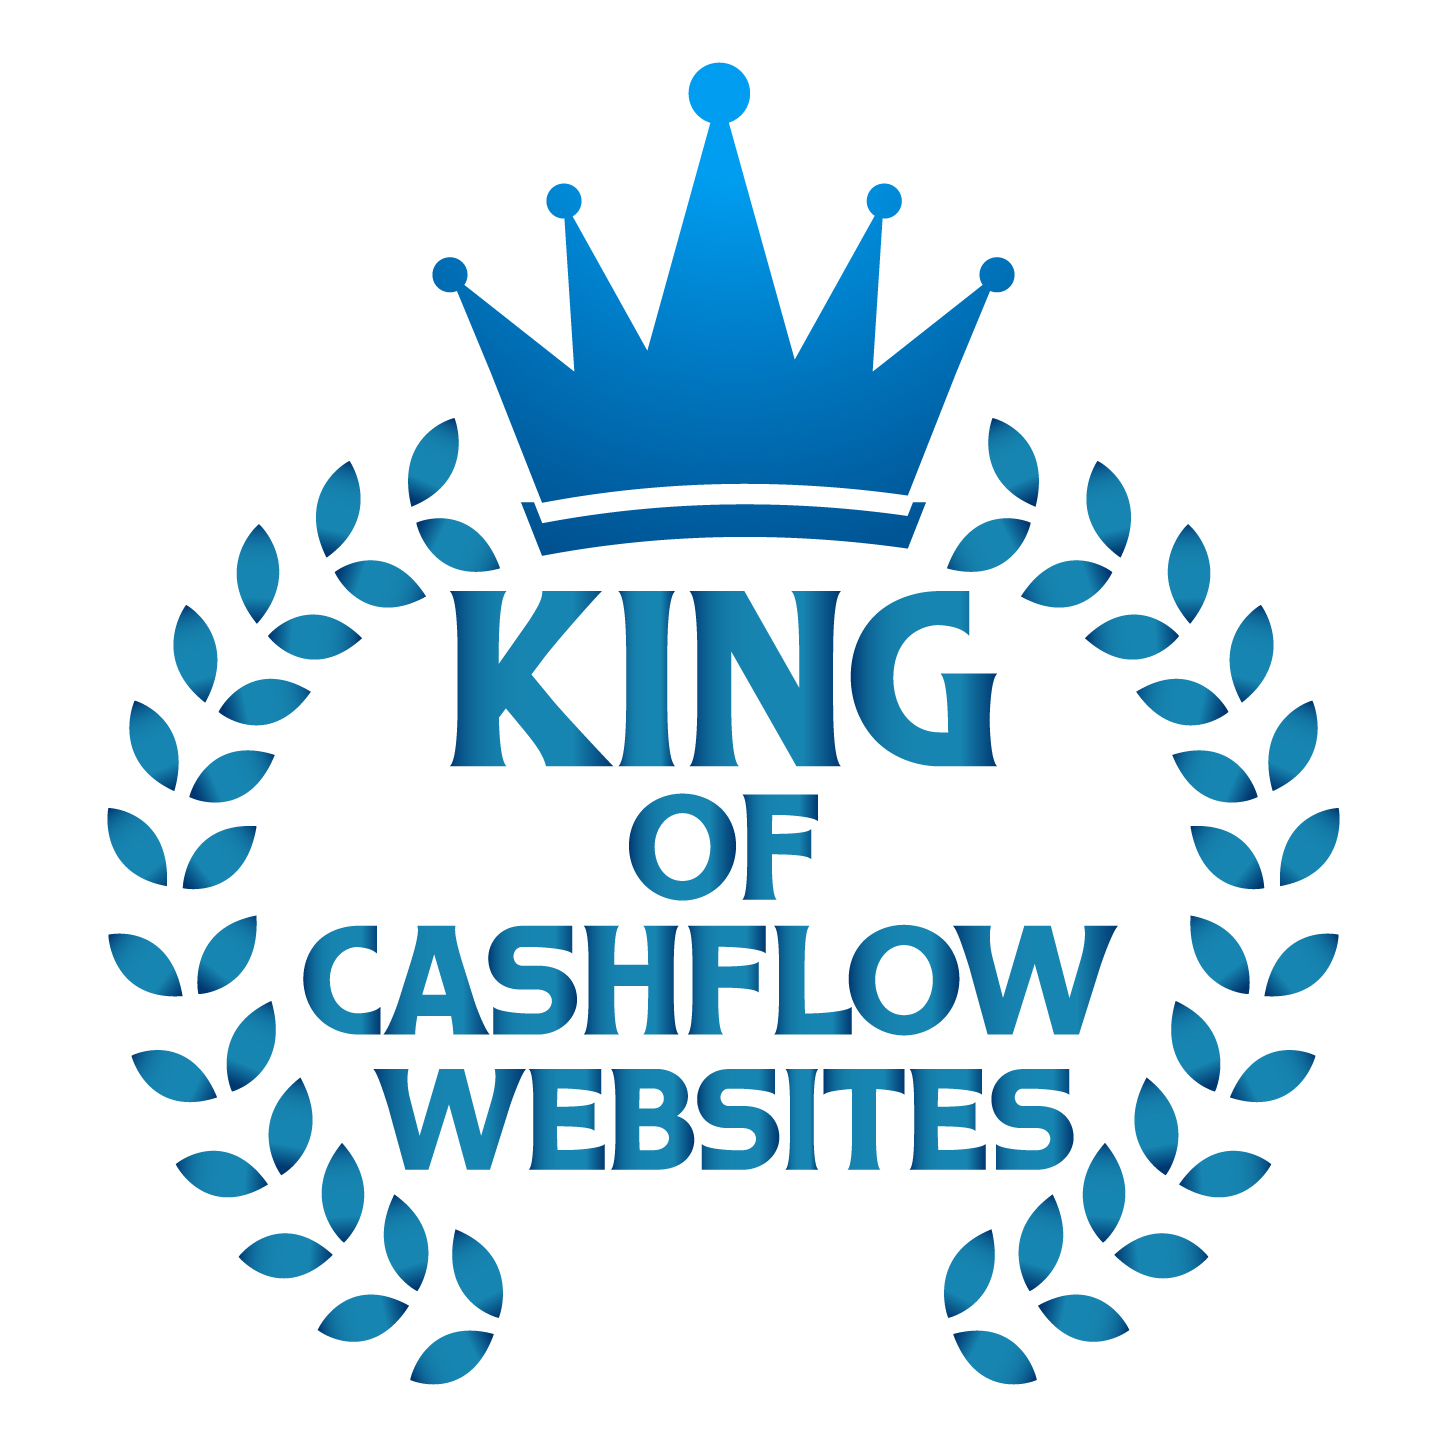 King of Cashflow Websites